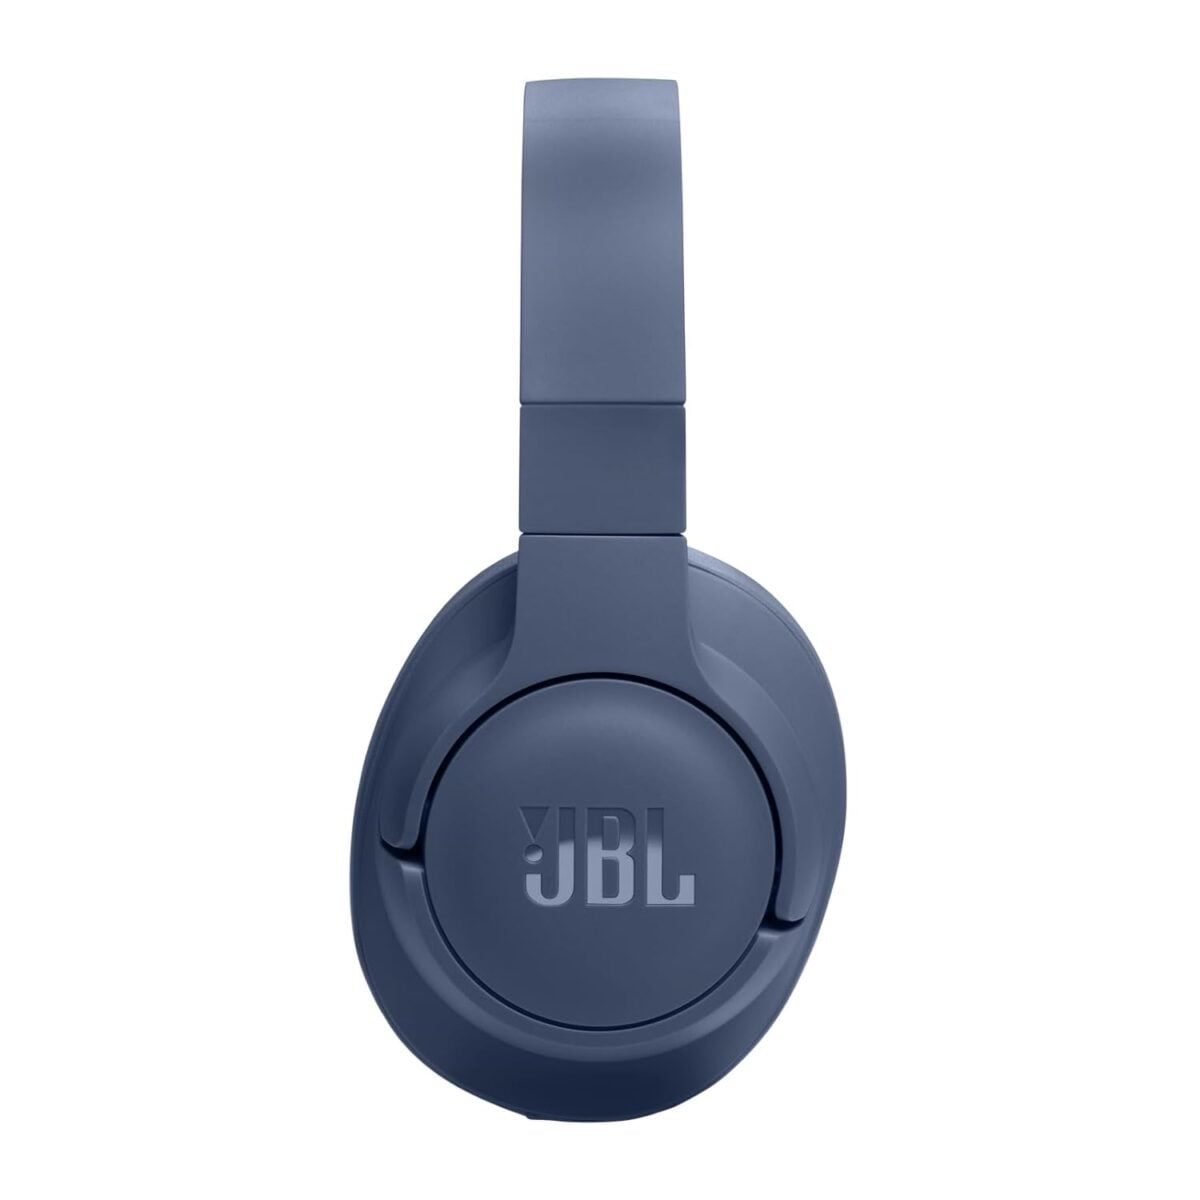 Jbl tune 720bt wireless over ear headphones blue 1 jbl tune 720bt